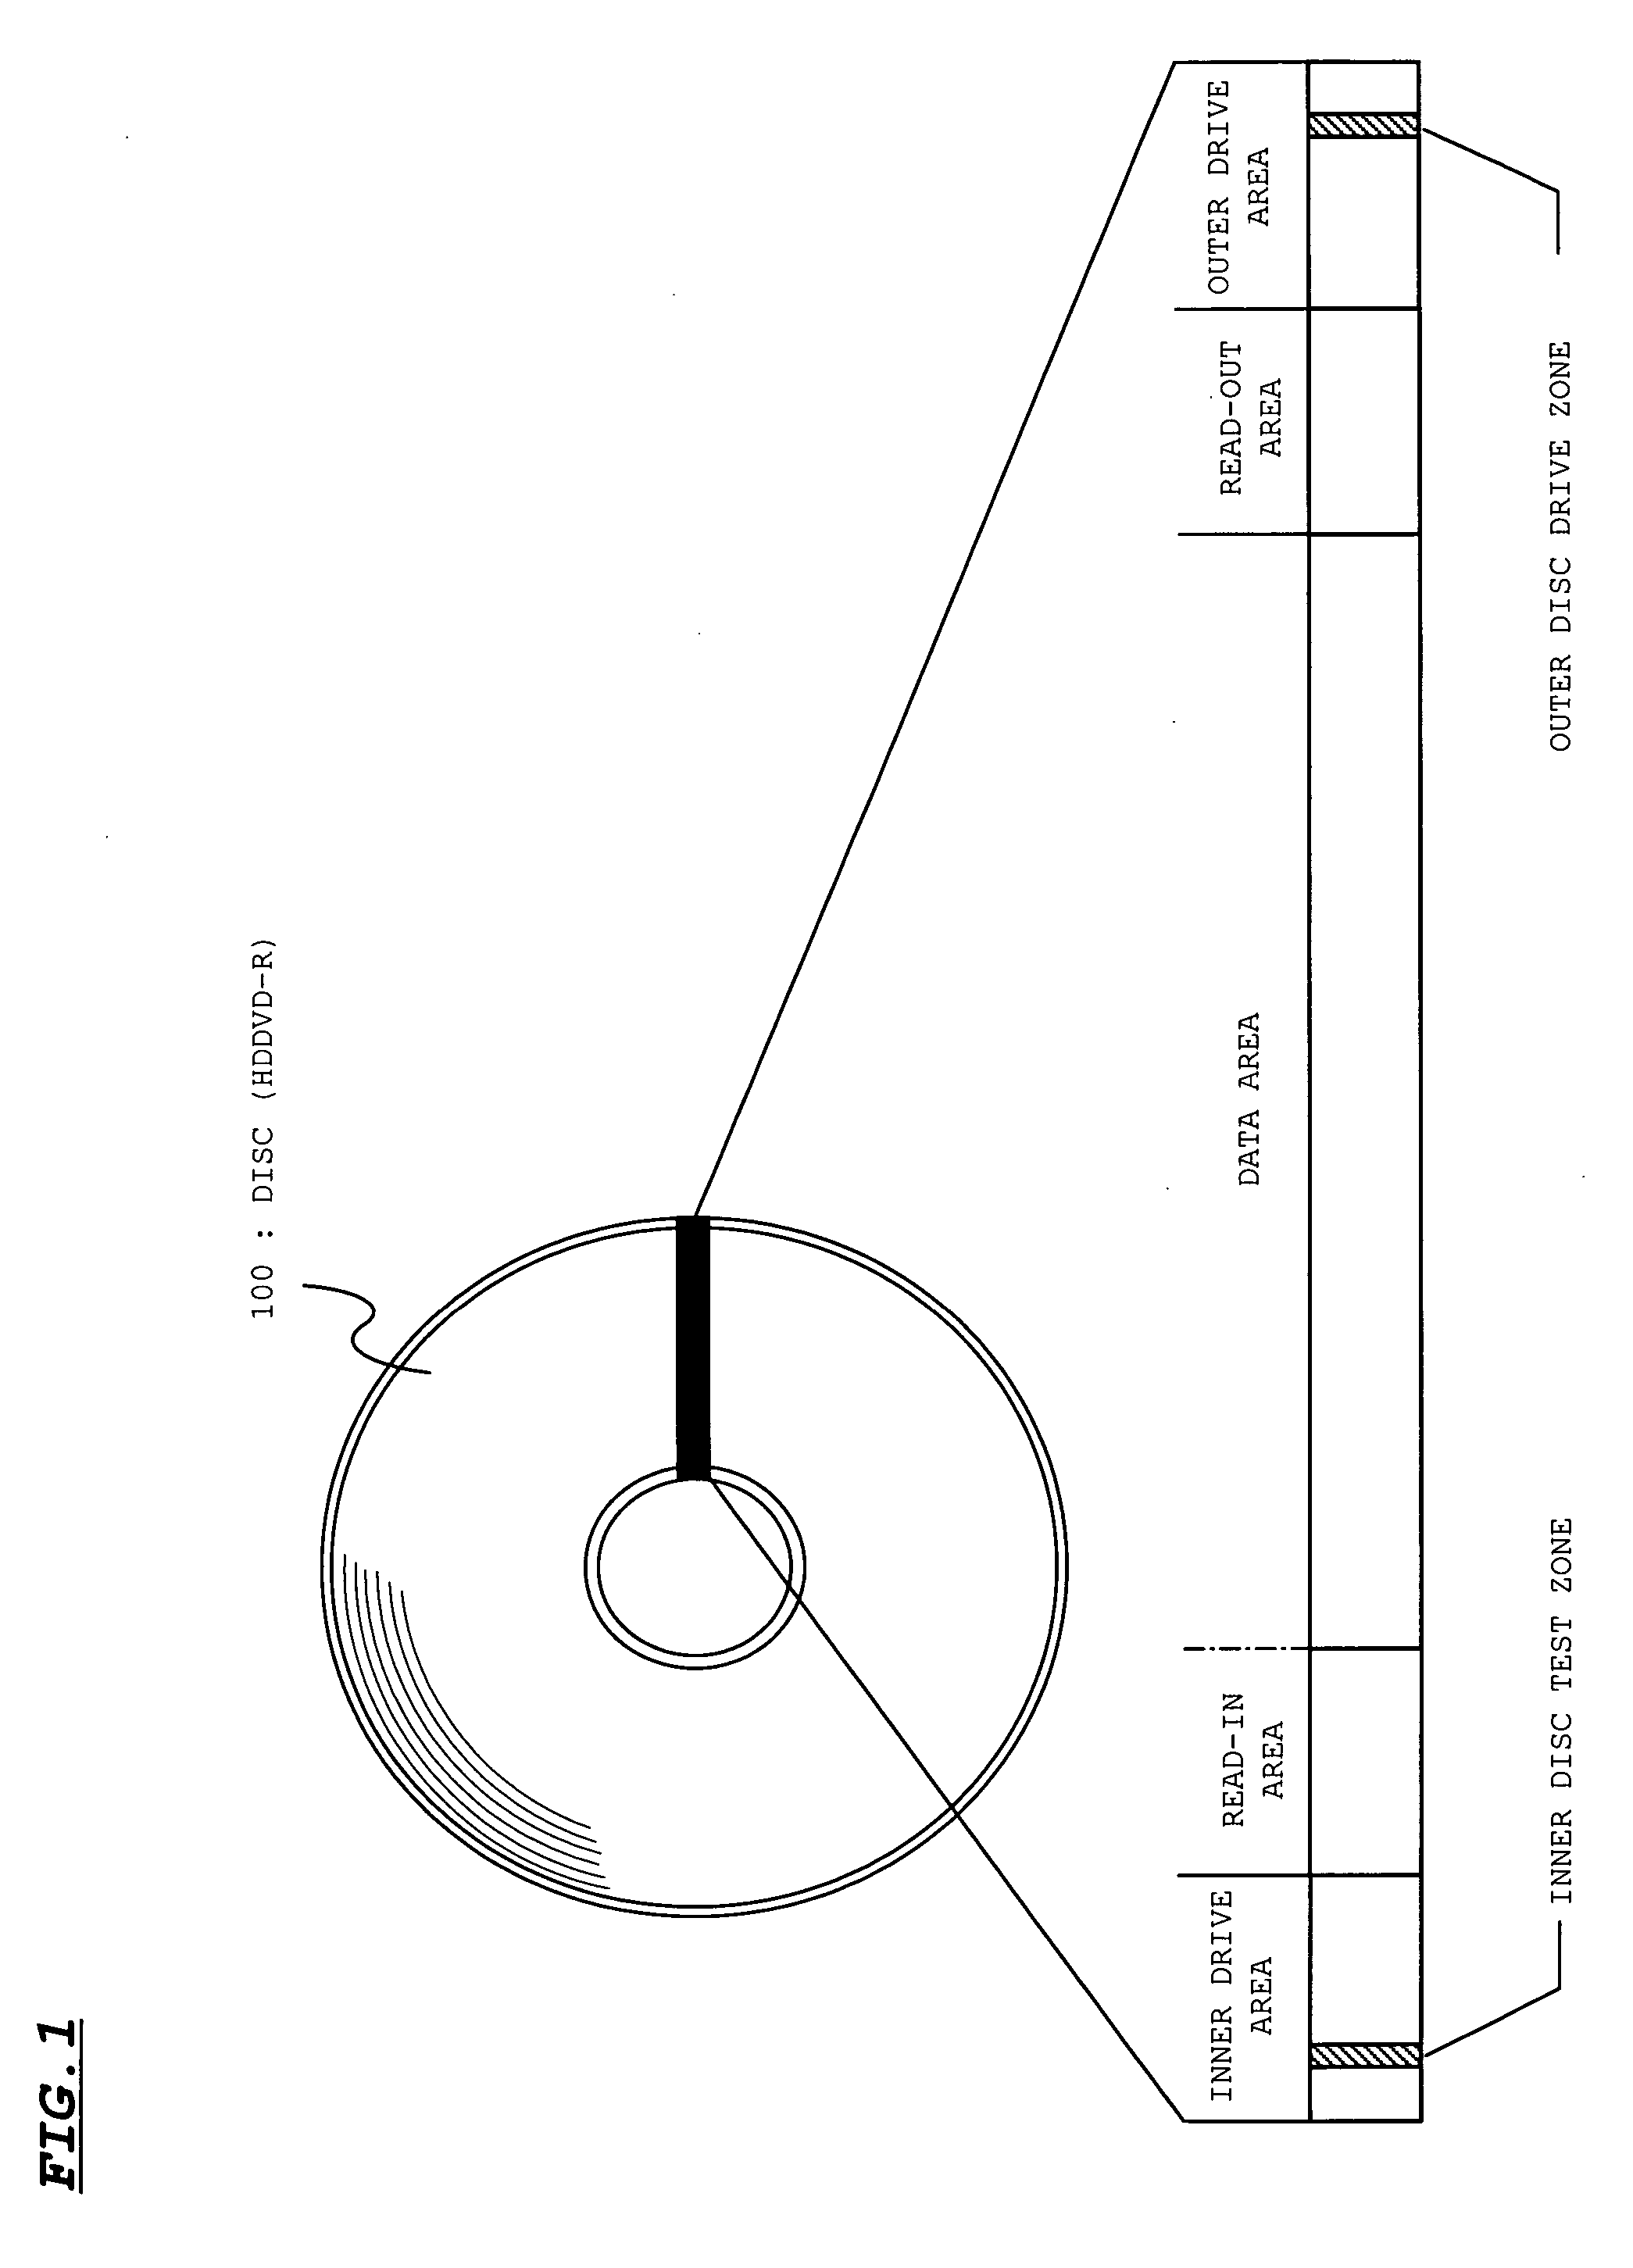 Optical disc device and recording medium